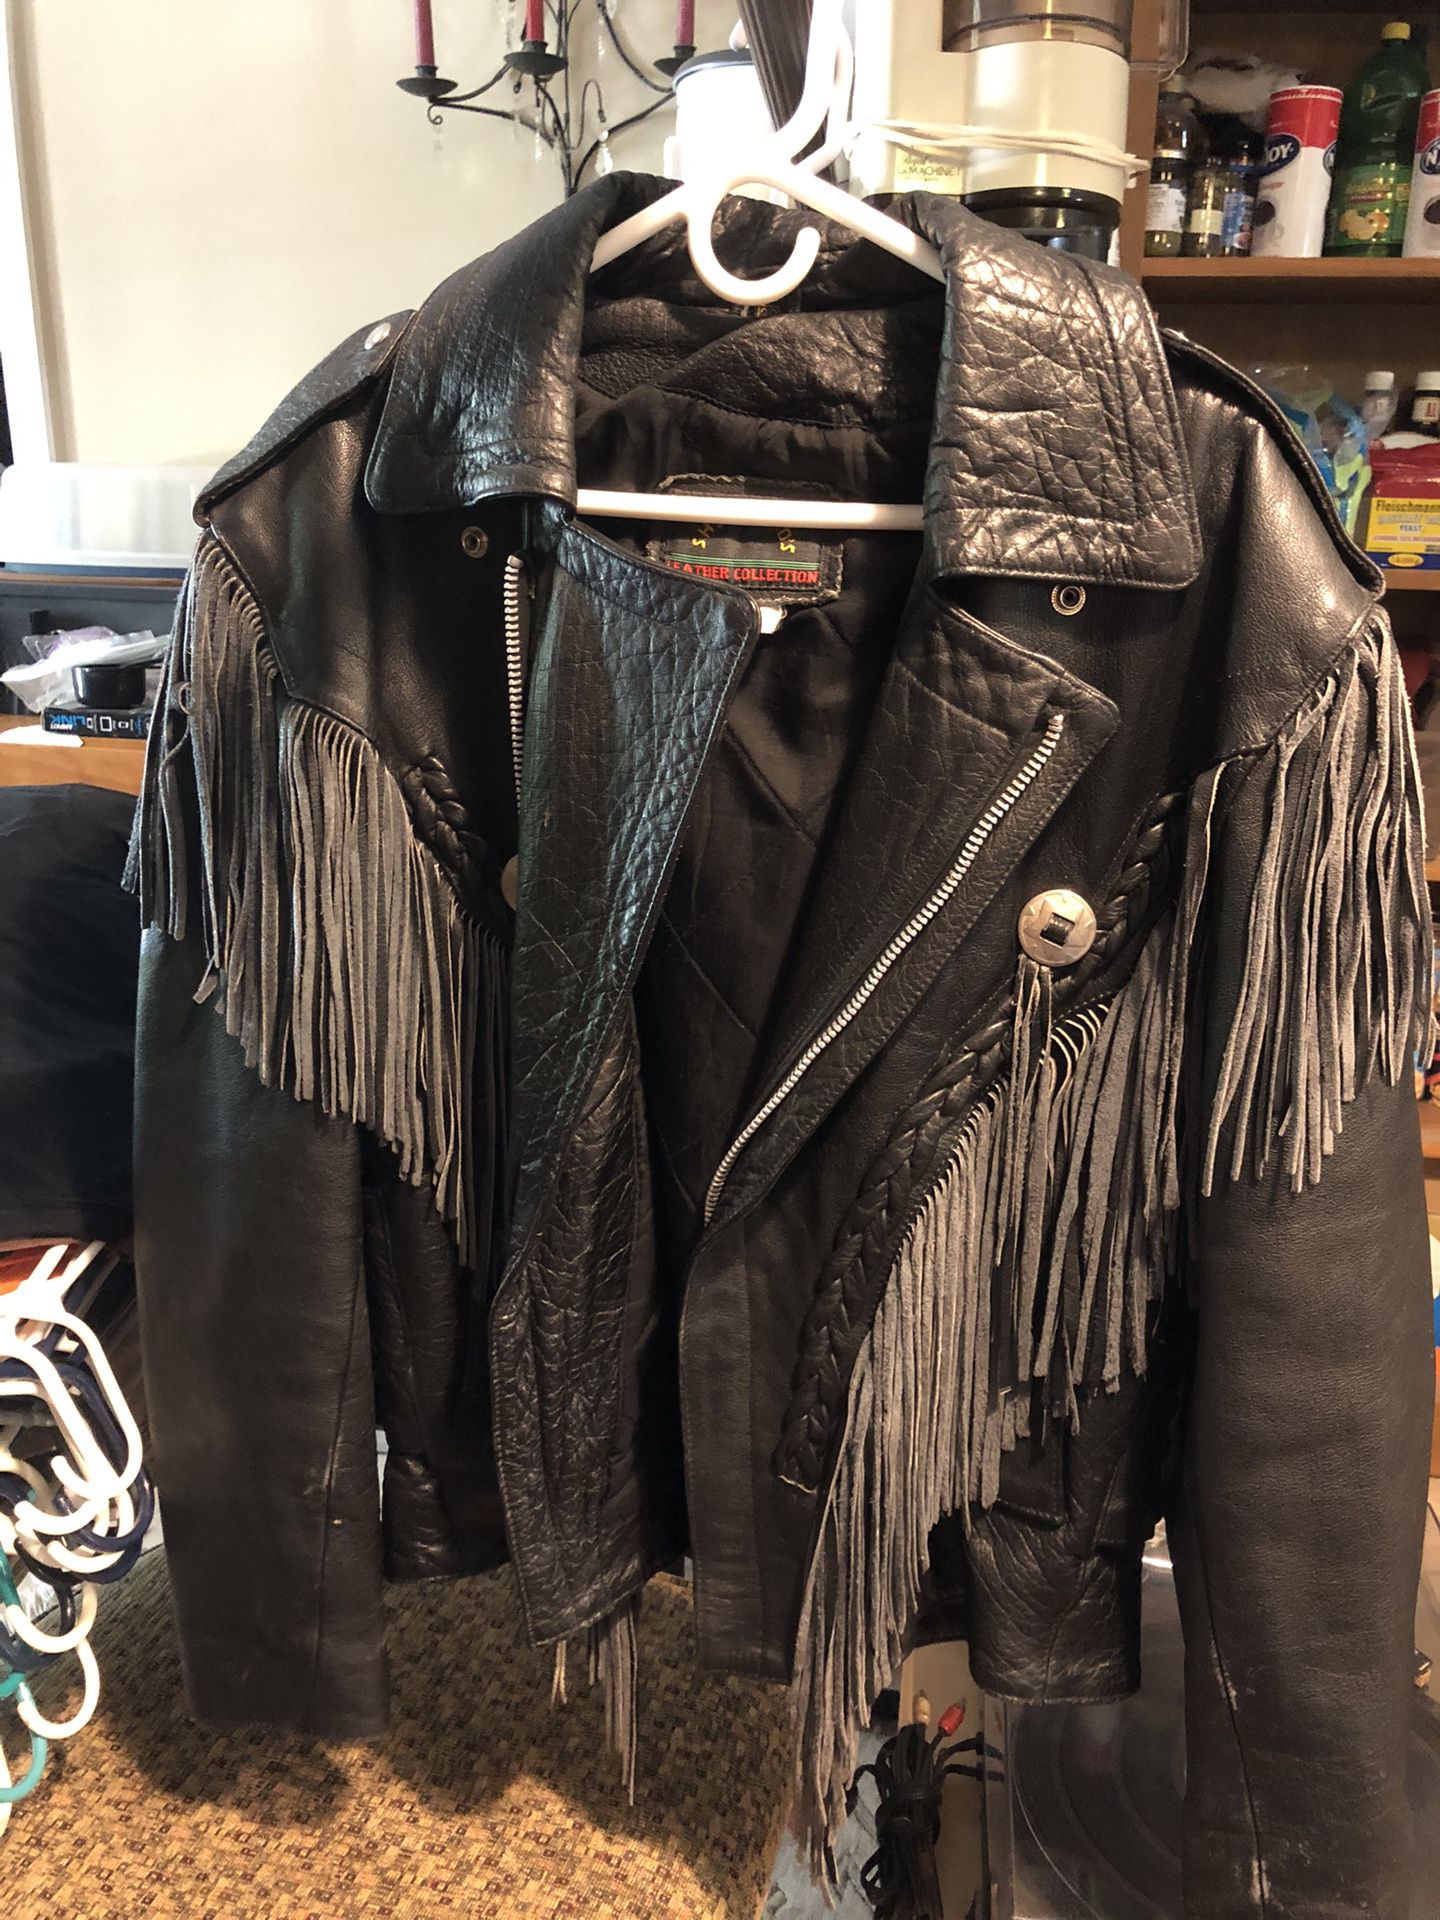 Women’s Black Leather Jacket 